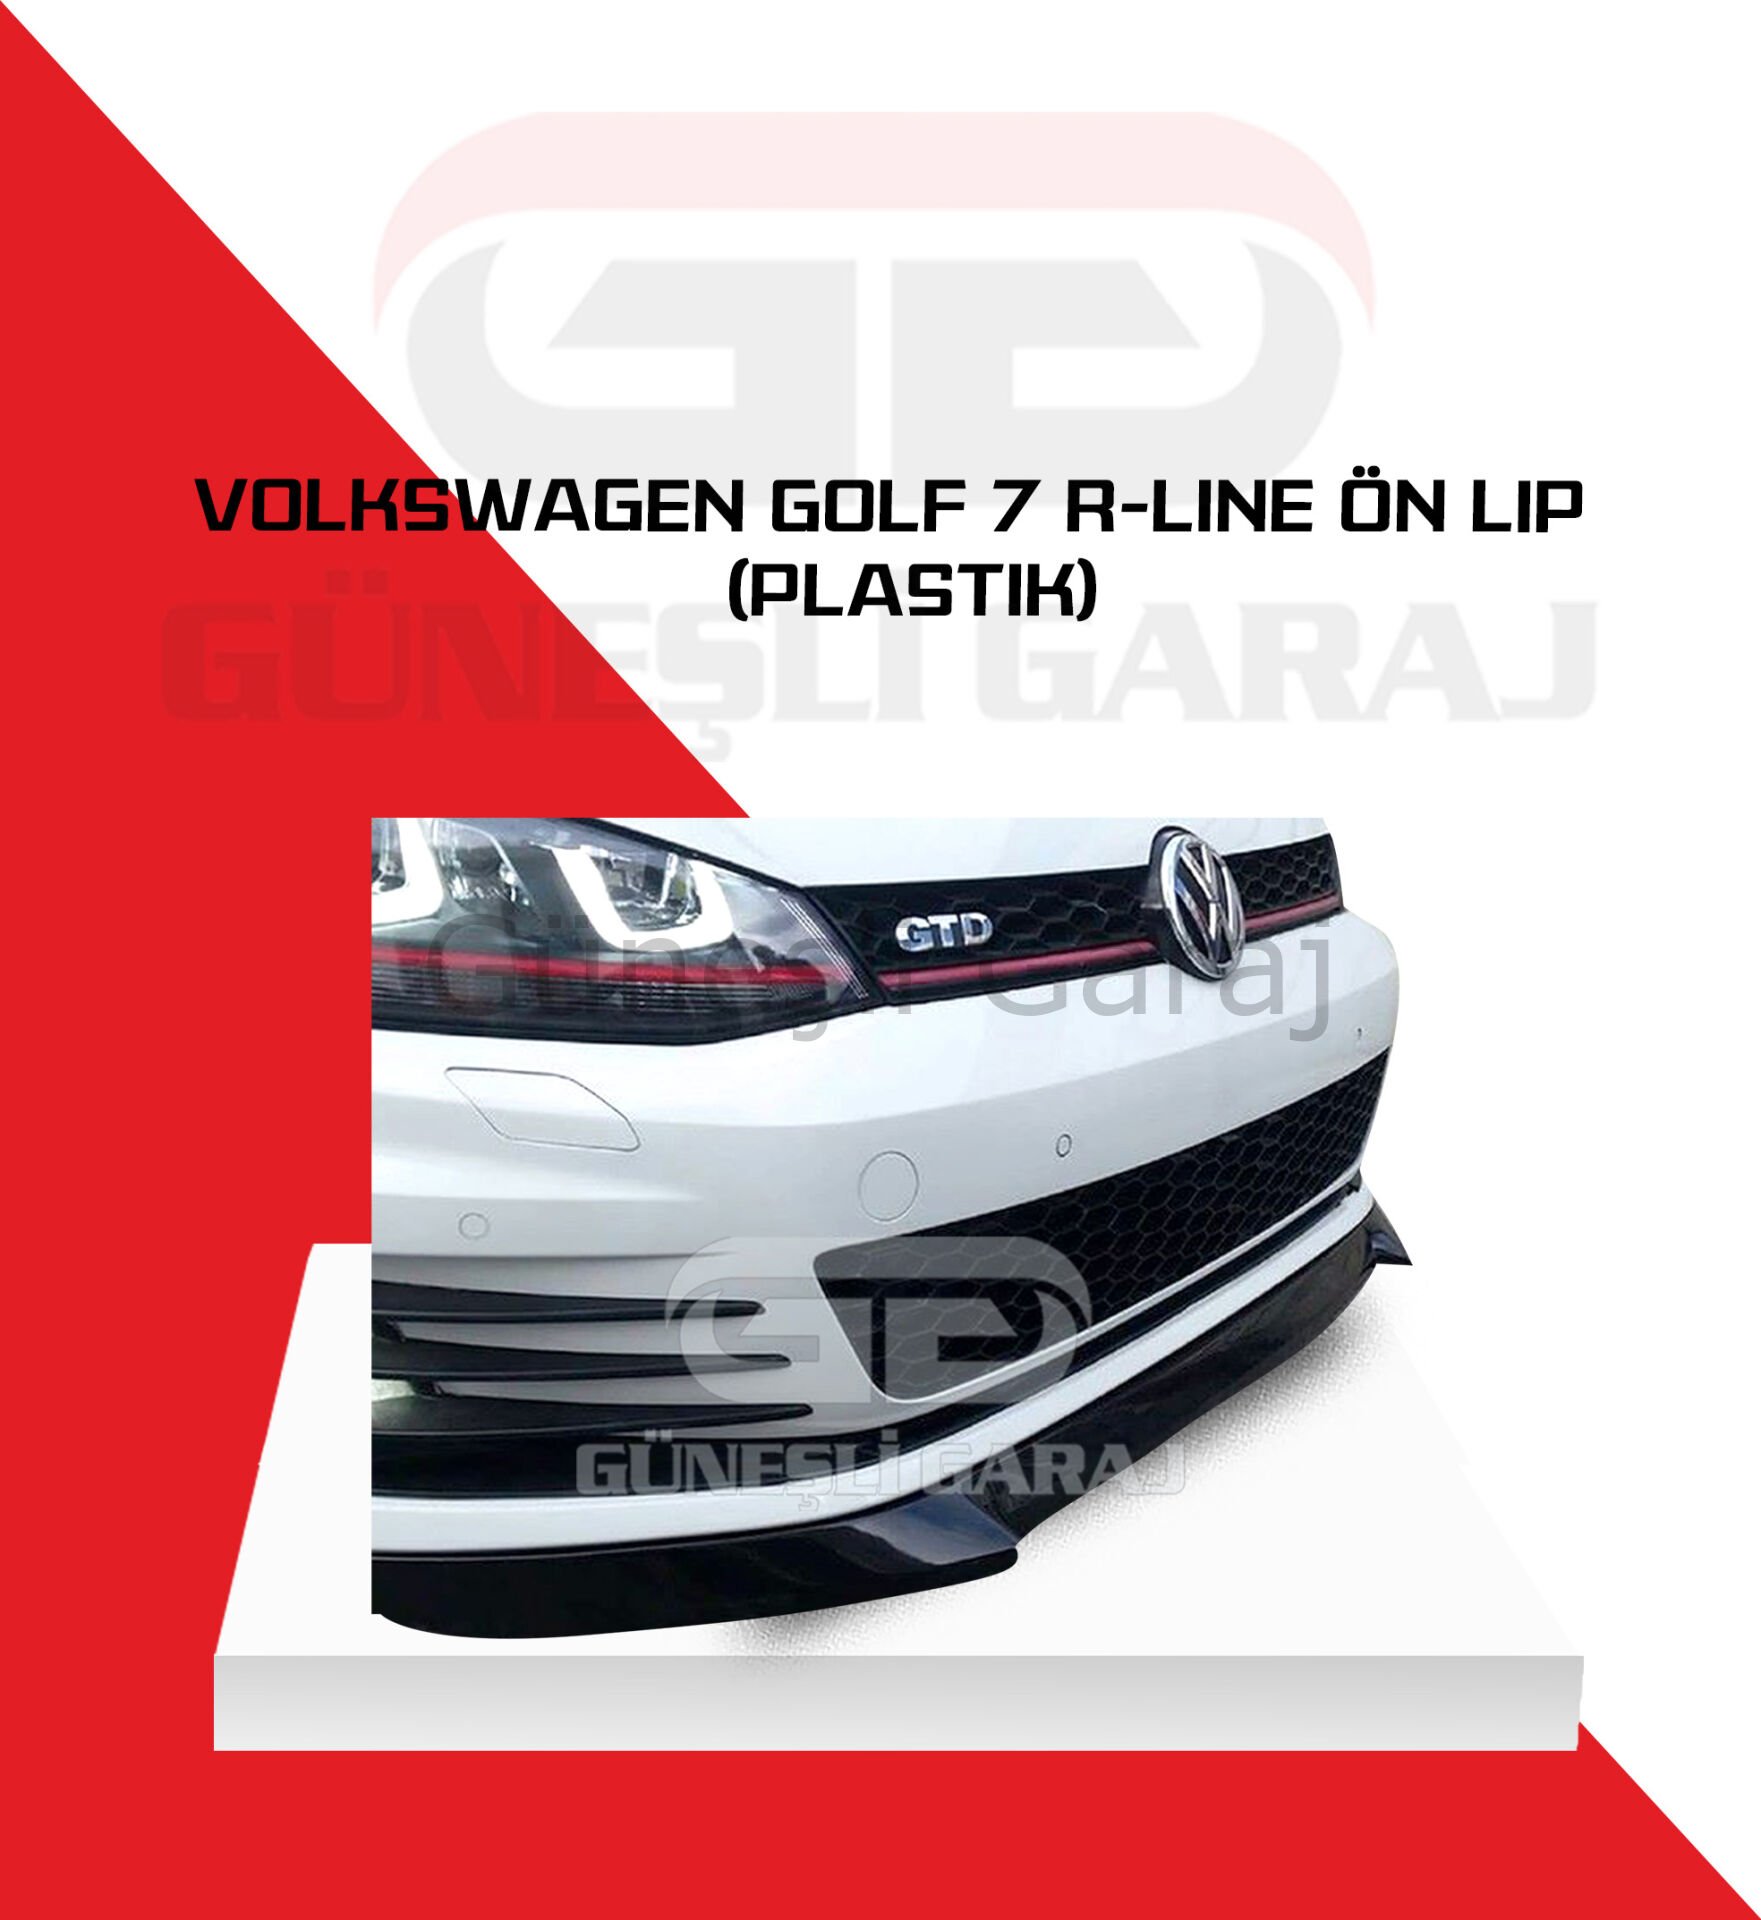 Volkswagen Golf 7 R-Line Ön Lip (Plastik)